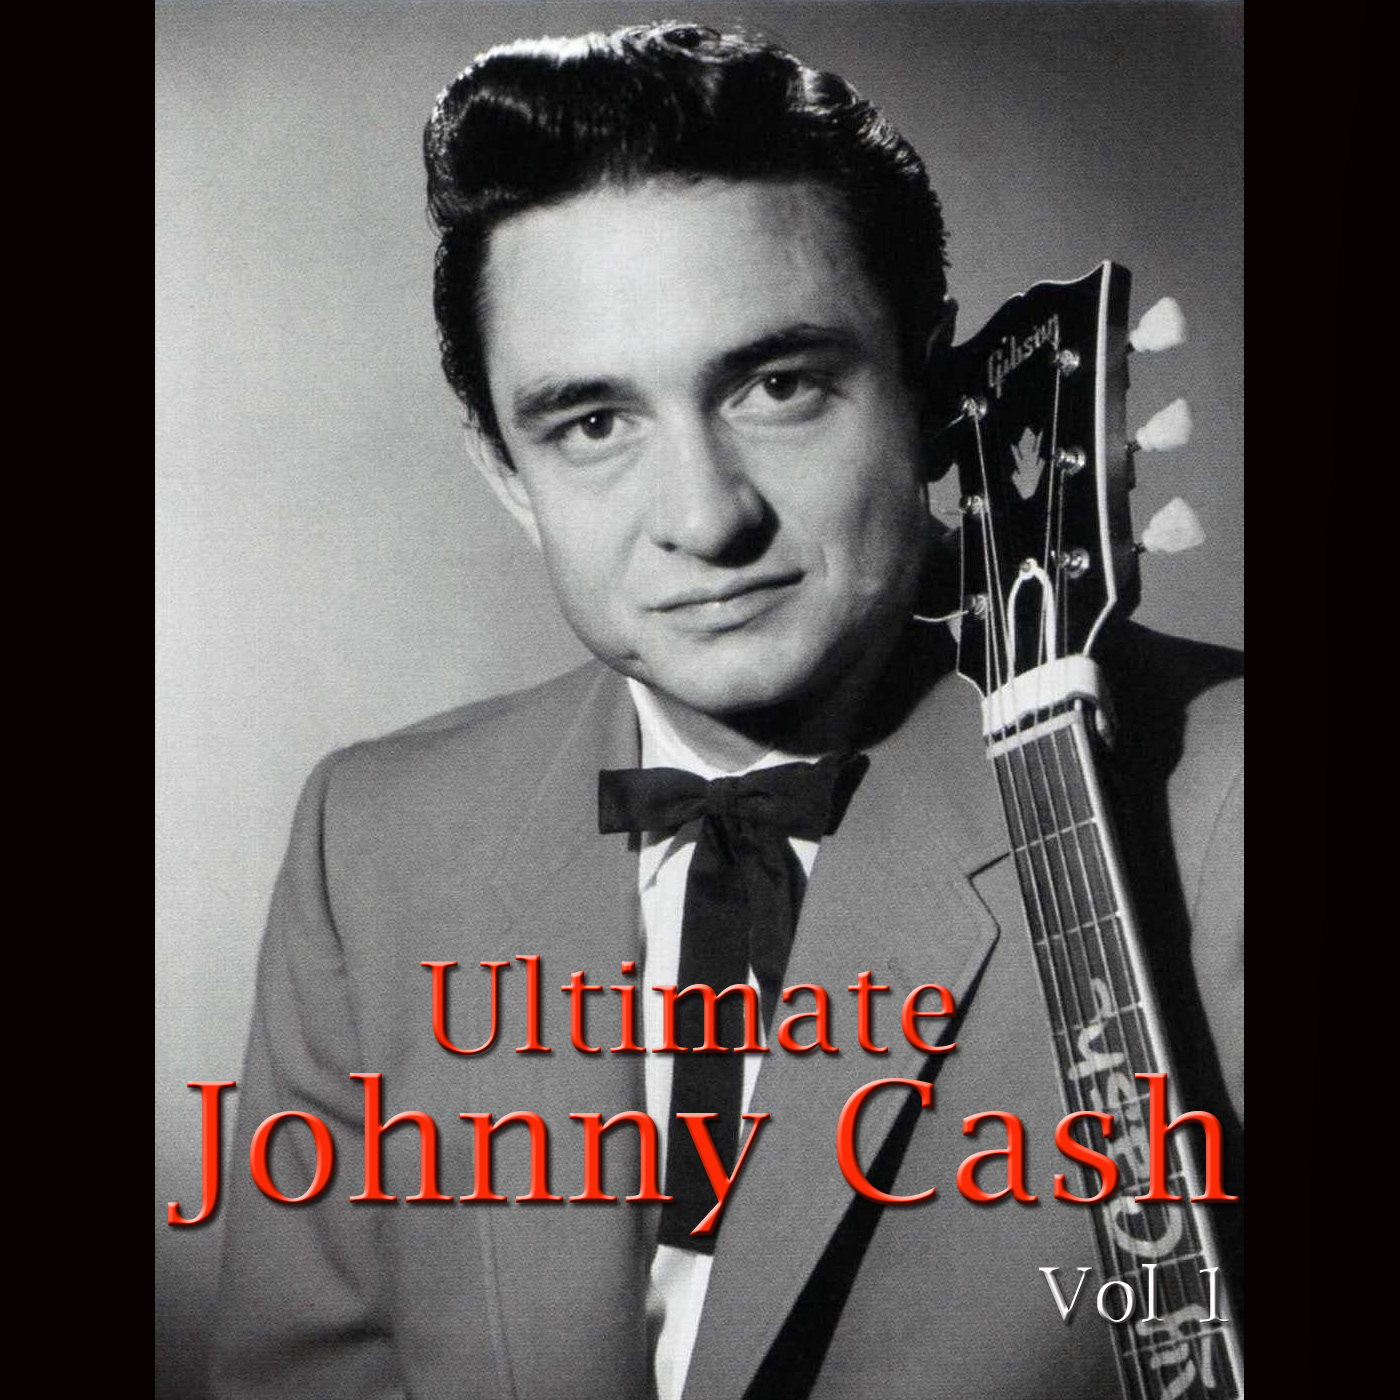 Ultimate Johnny Cash Vol 1